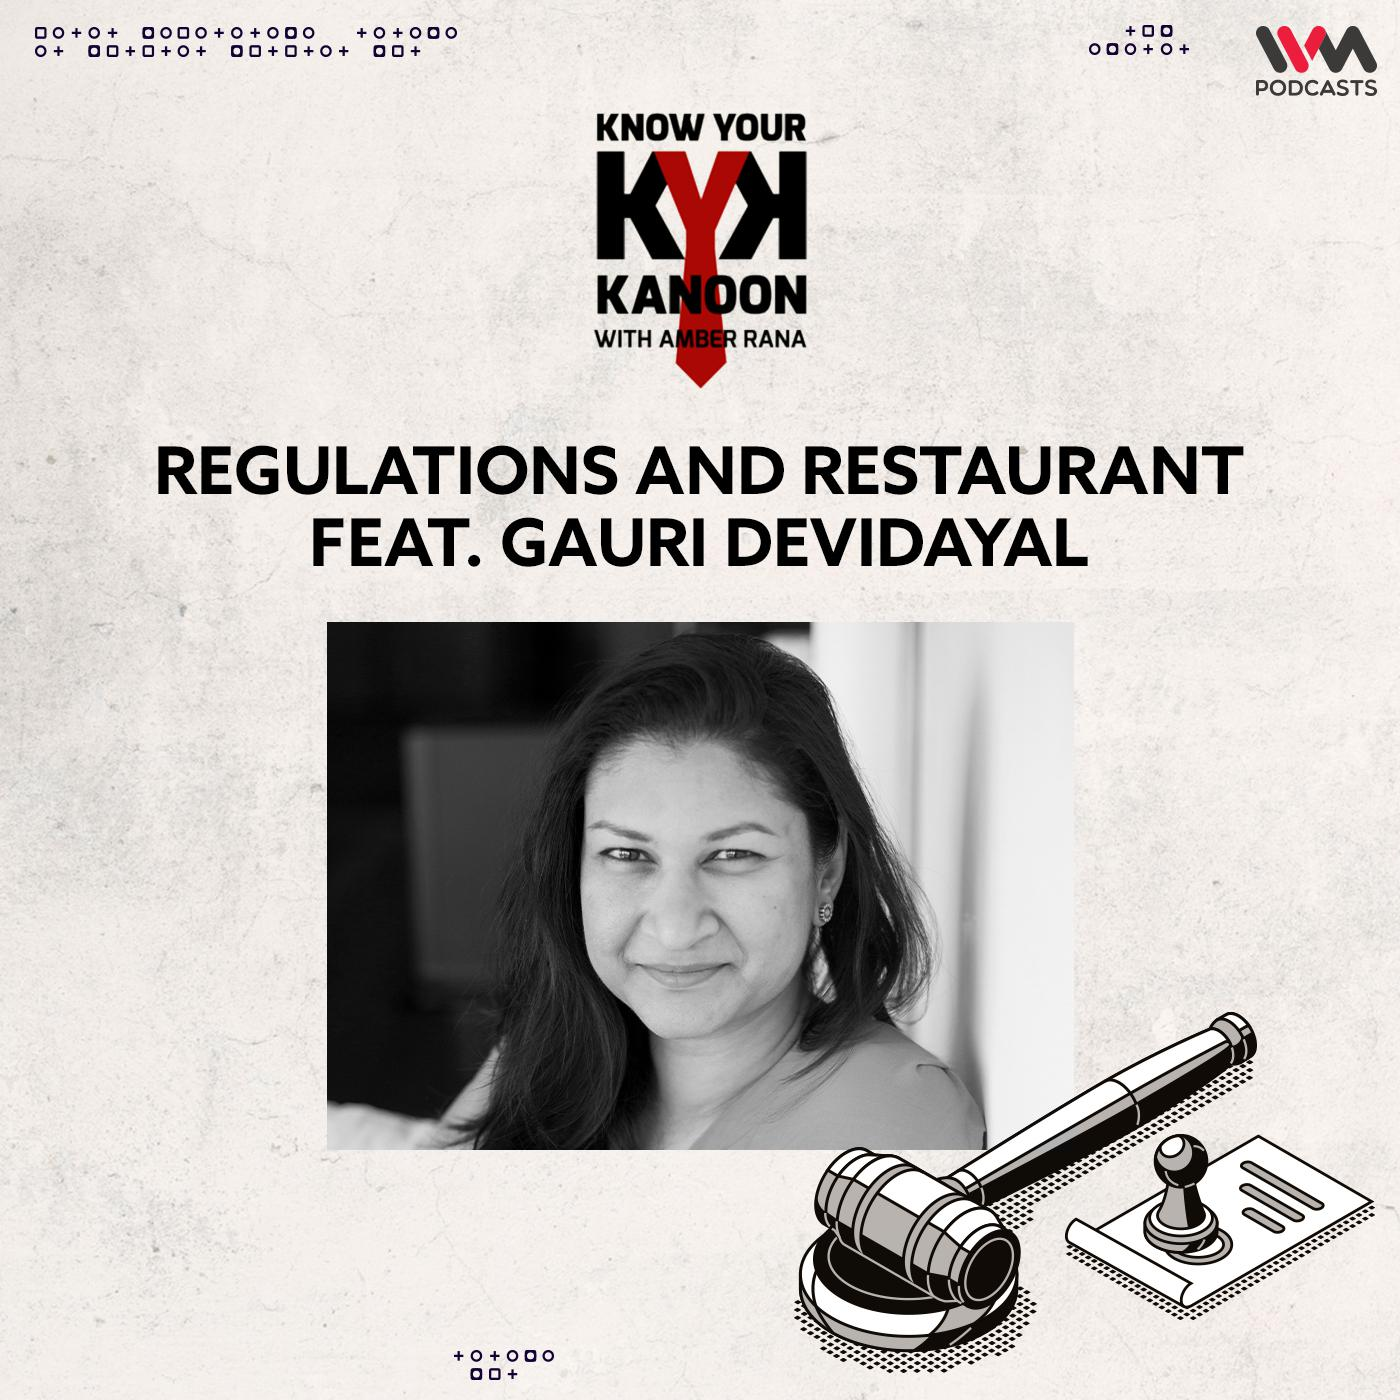 S04 E13: Regulations and Restaurant feat. Gauri Devidayal